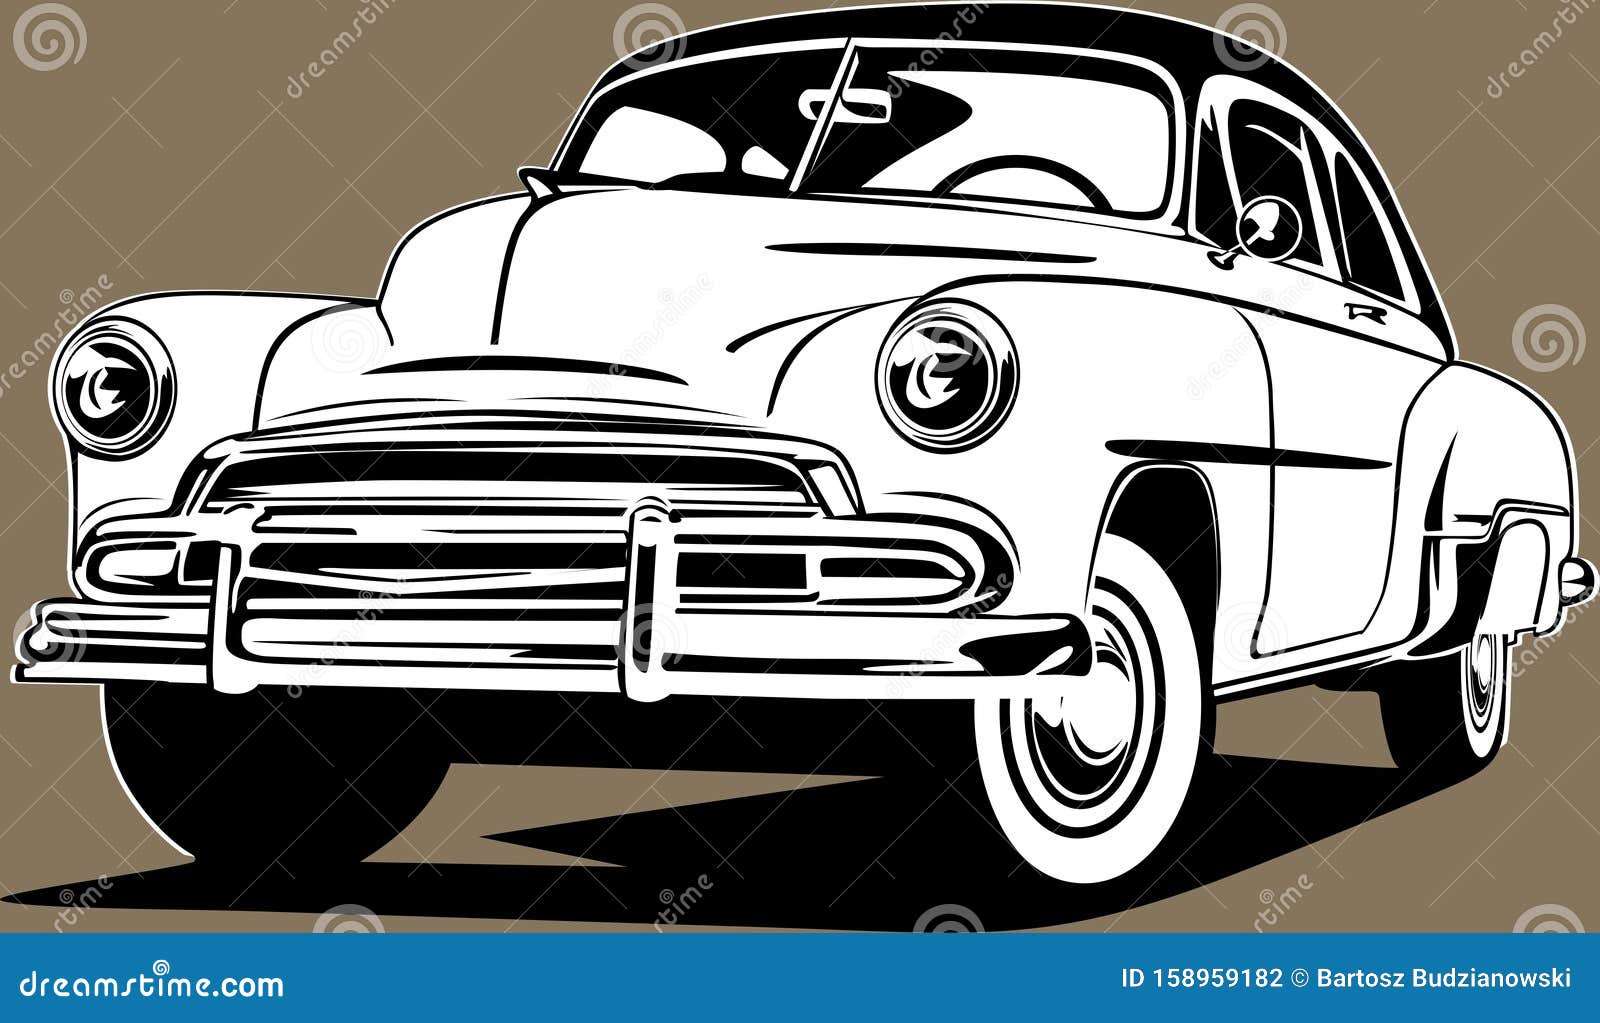 classic american vintage retro car chevrolet bel air